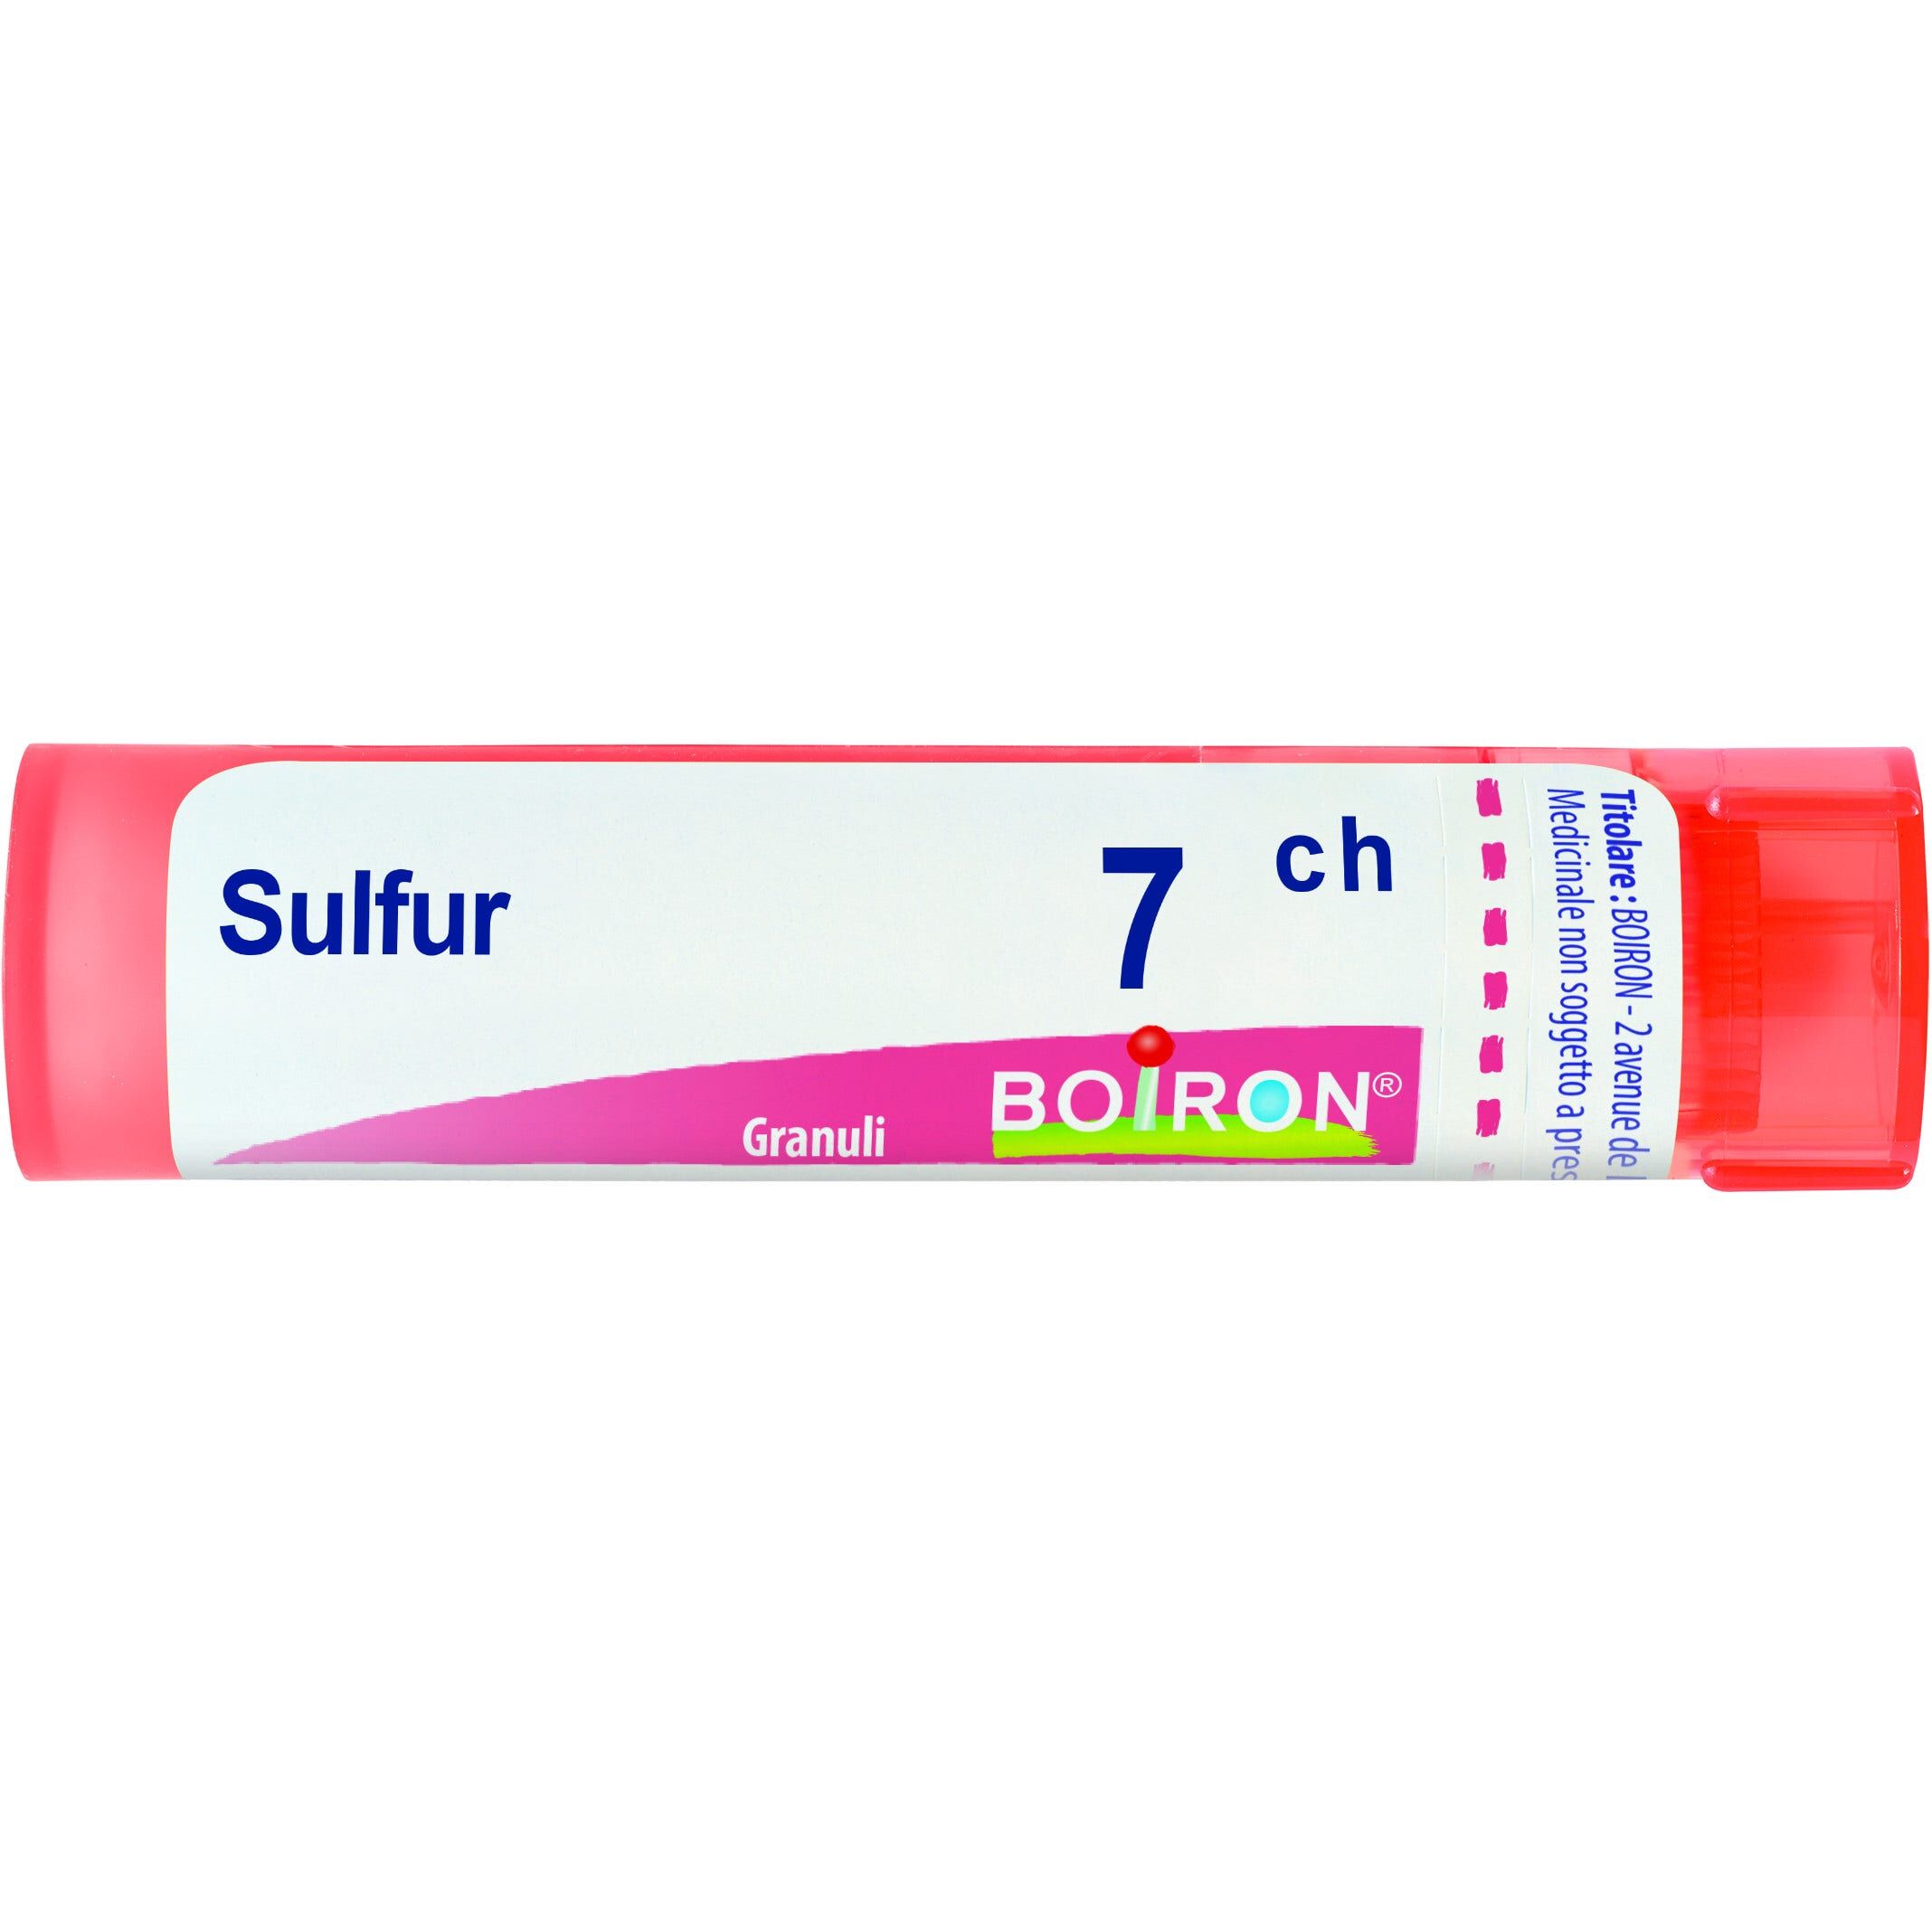 Boiron Sulfur 80 Granuli 7 CH